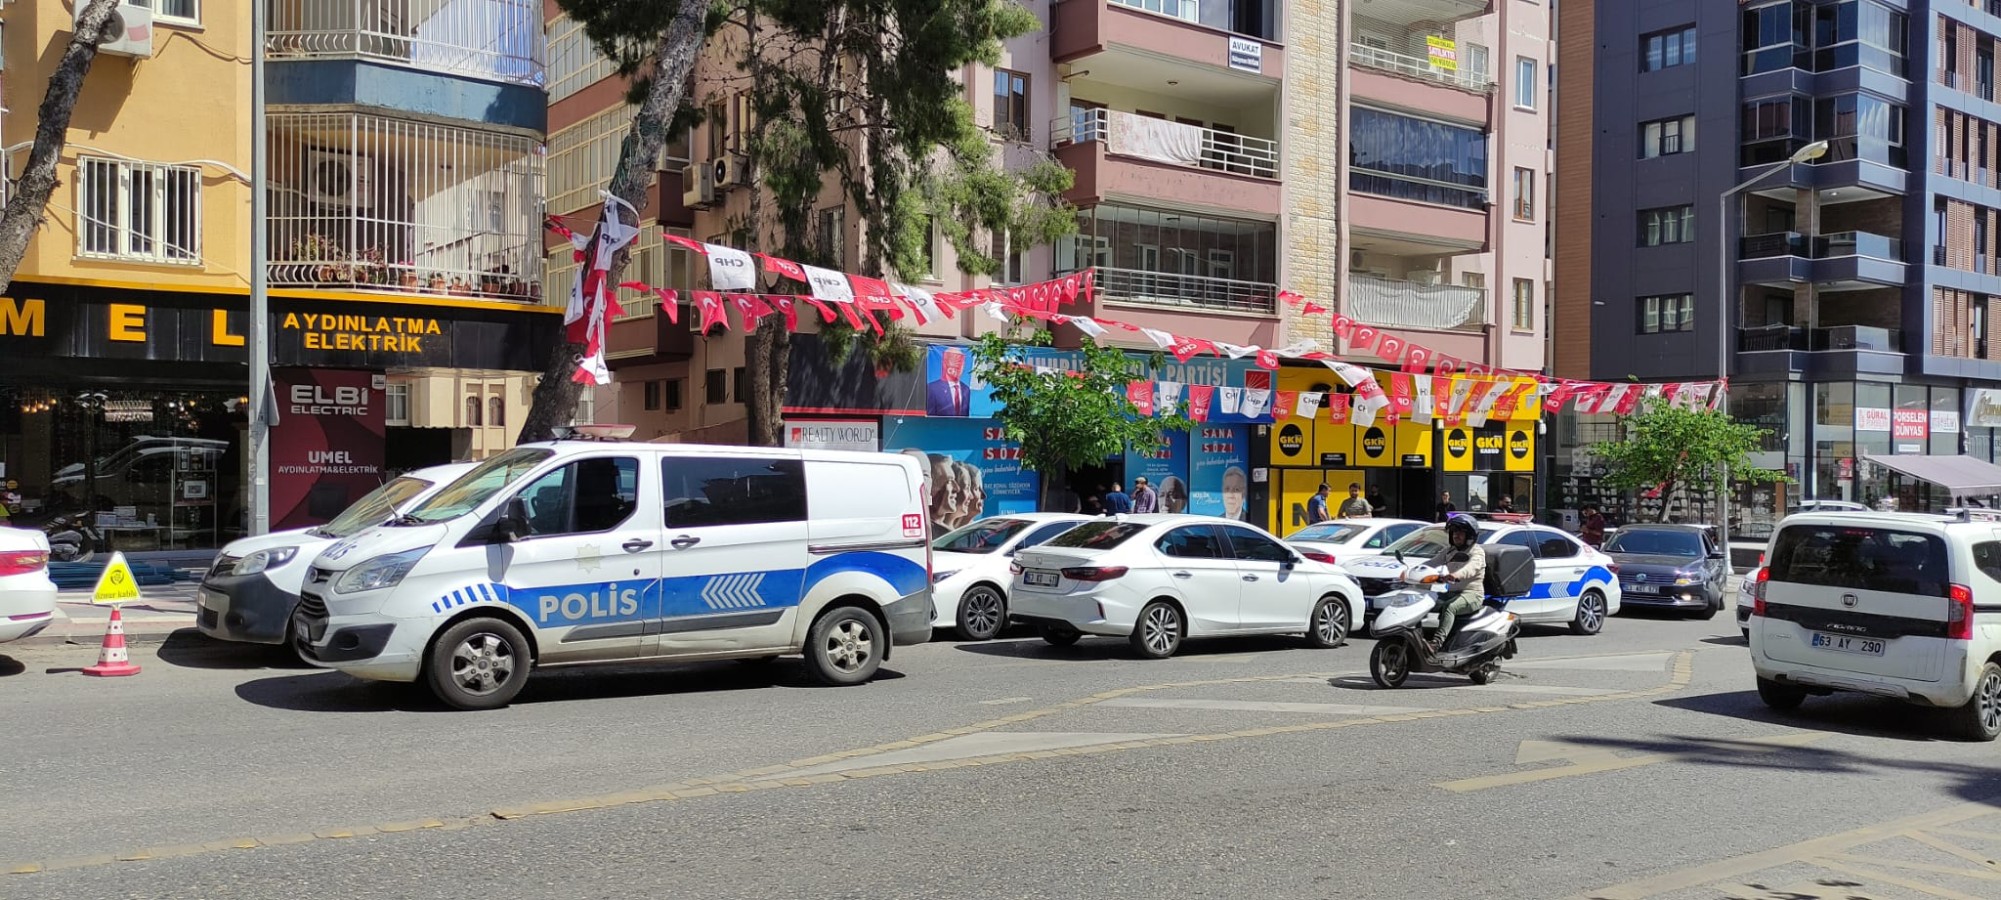 Urfa'da CHP'nin seçim ofisi kurşunlandı iddiası